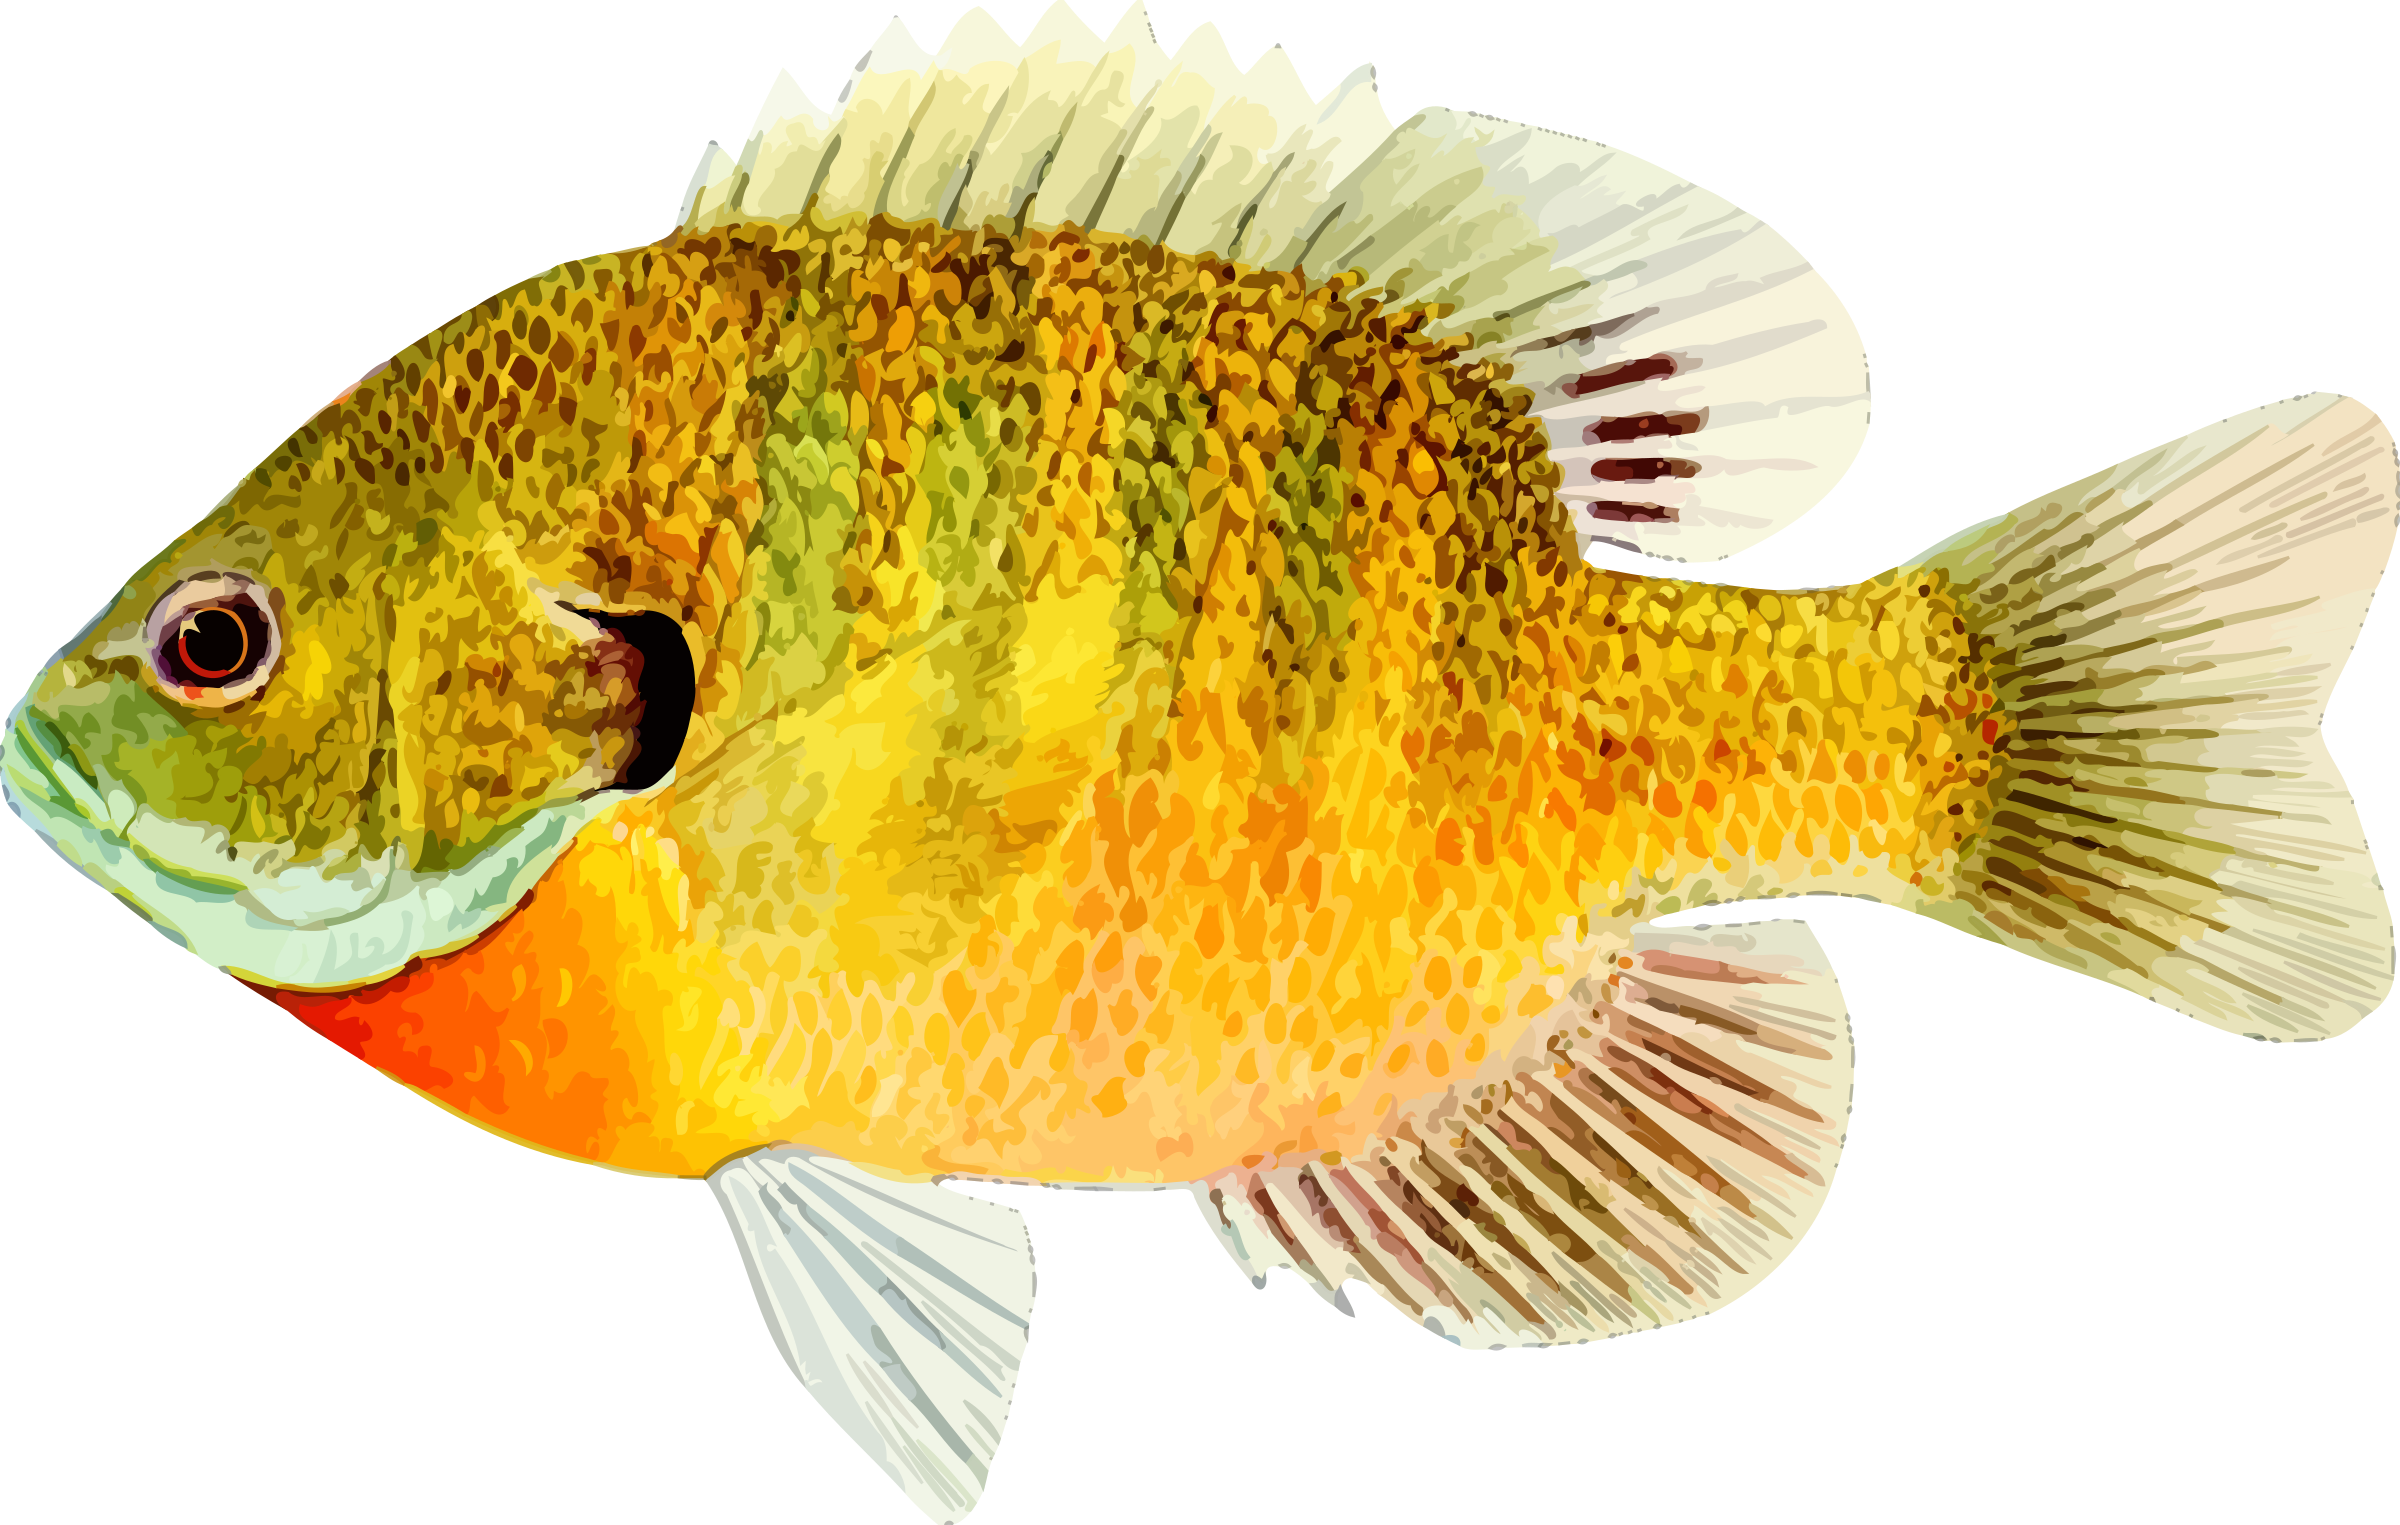 Big Image (Png) - Small Fish, Transparent background PNG HD thumbnail